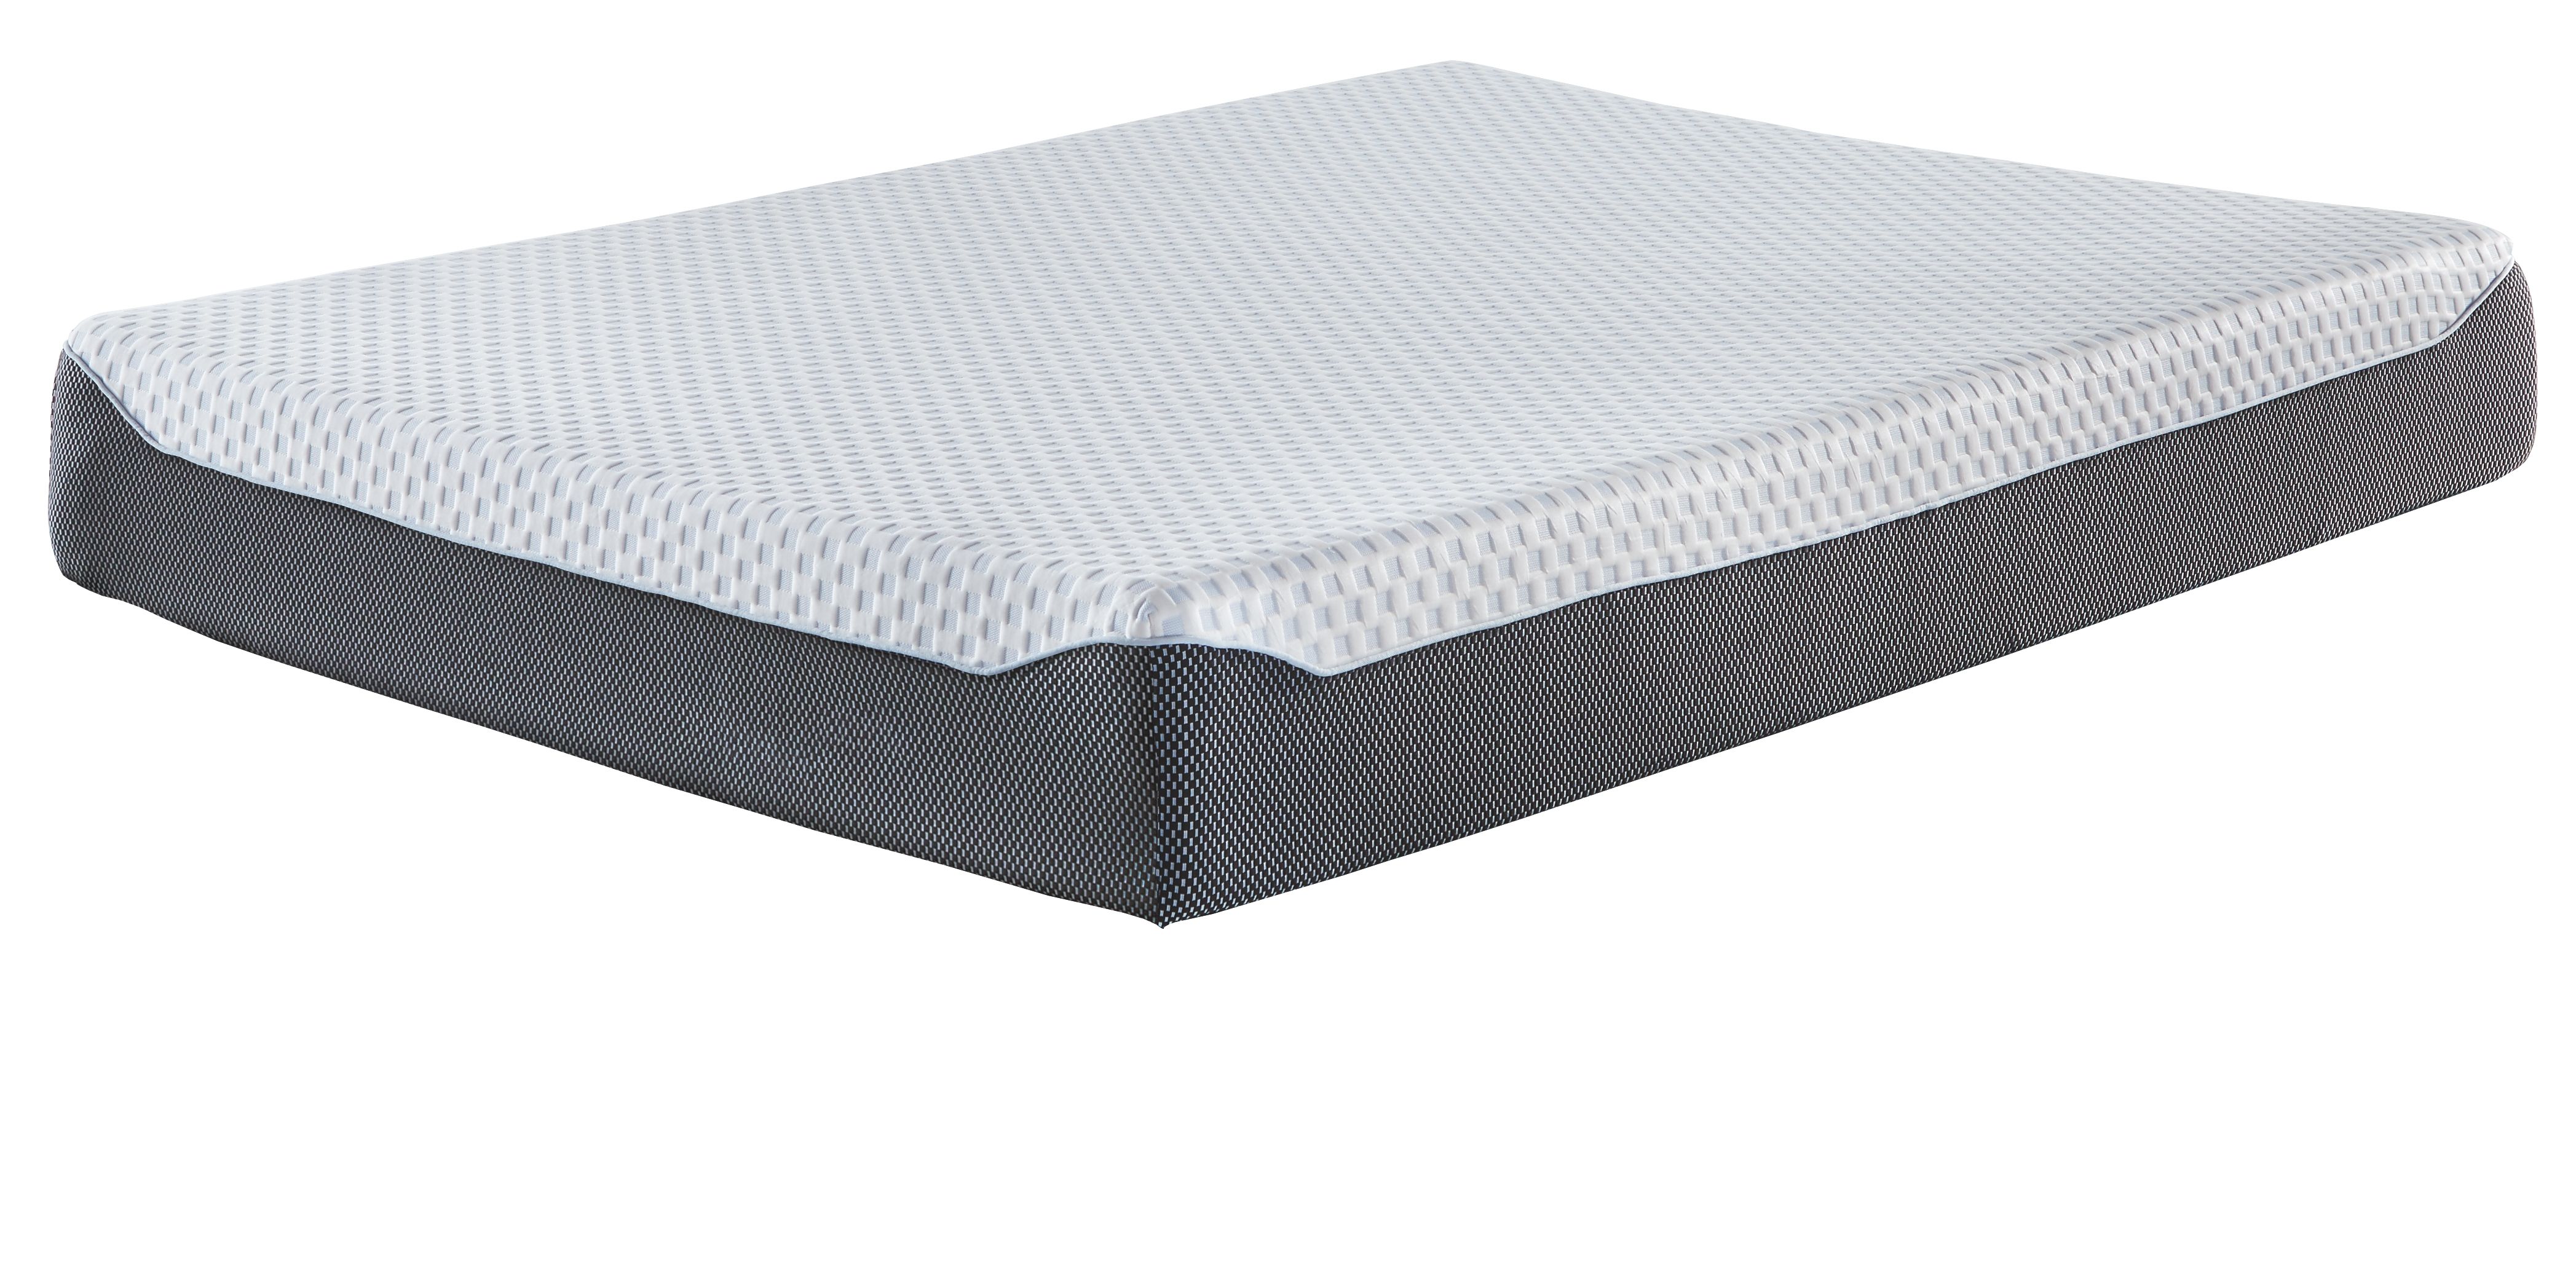 10 inch chime elite mattress by ashley furniture